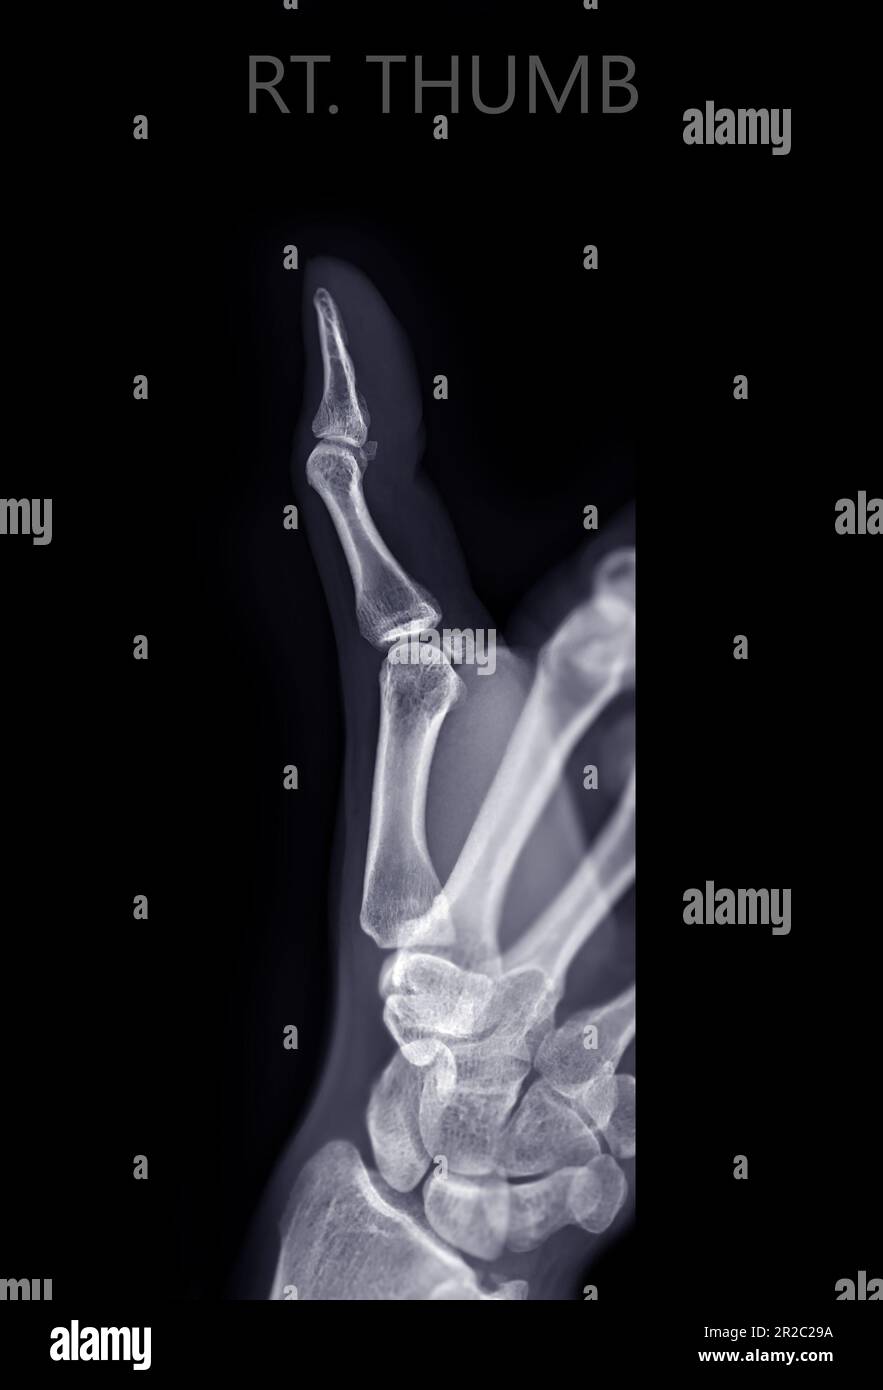 x-raiy image of thumb finger. Stock Photo